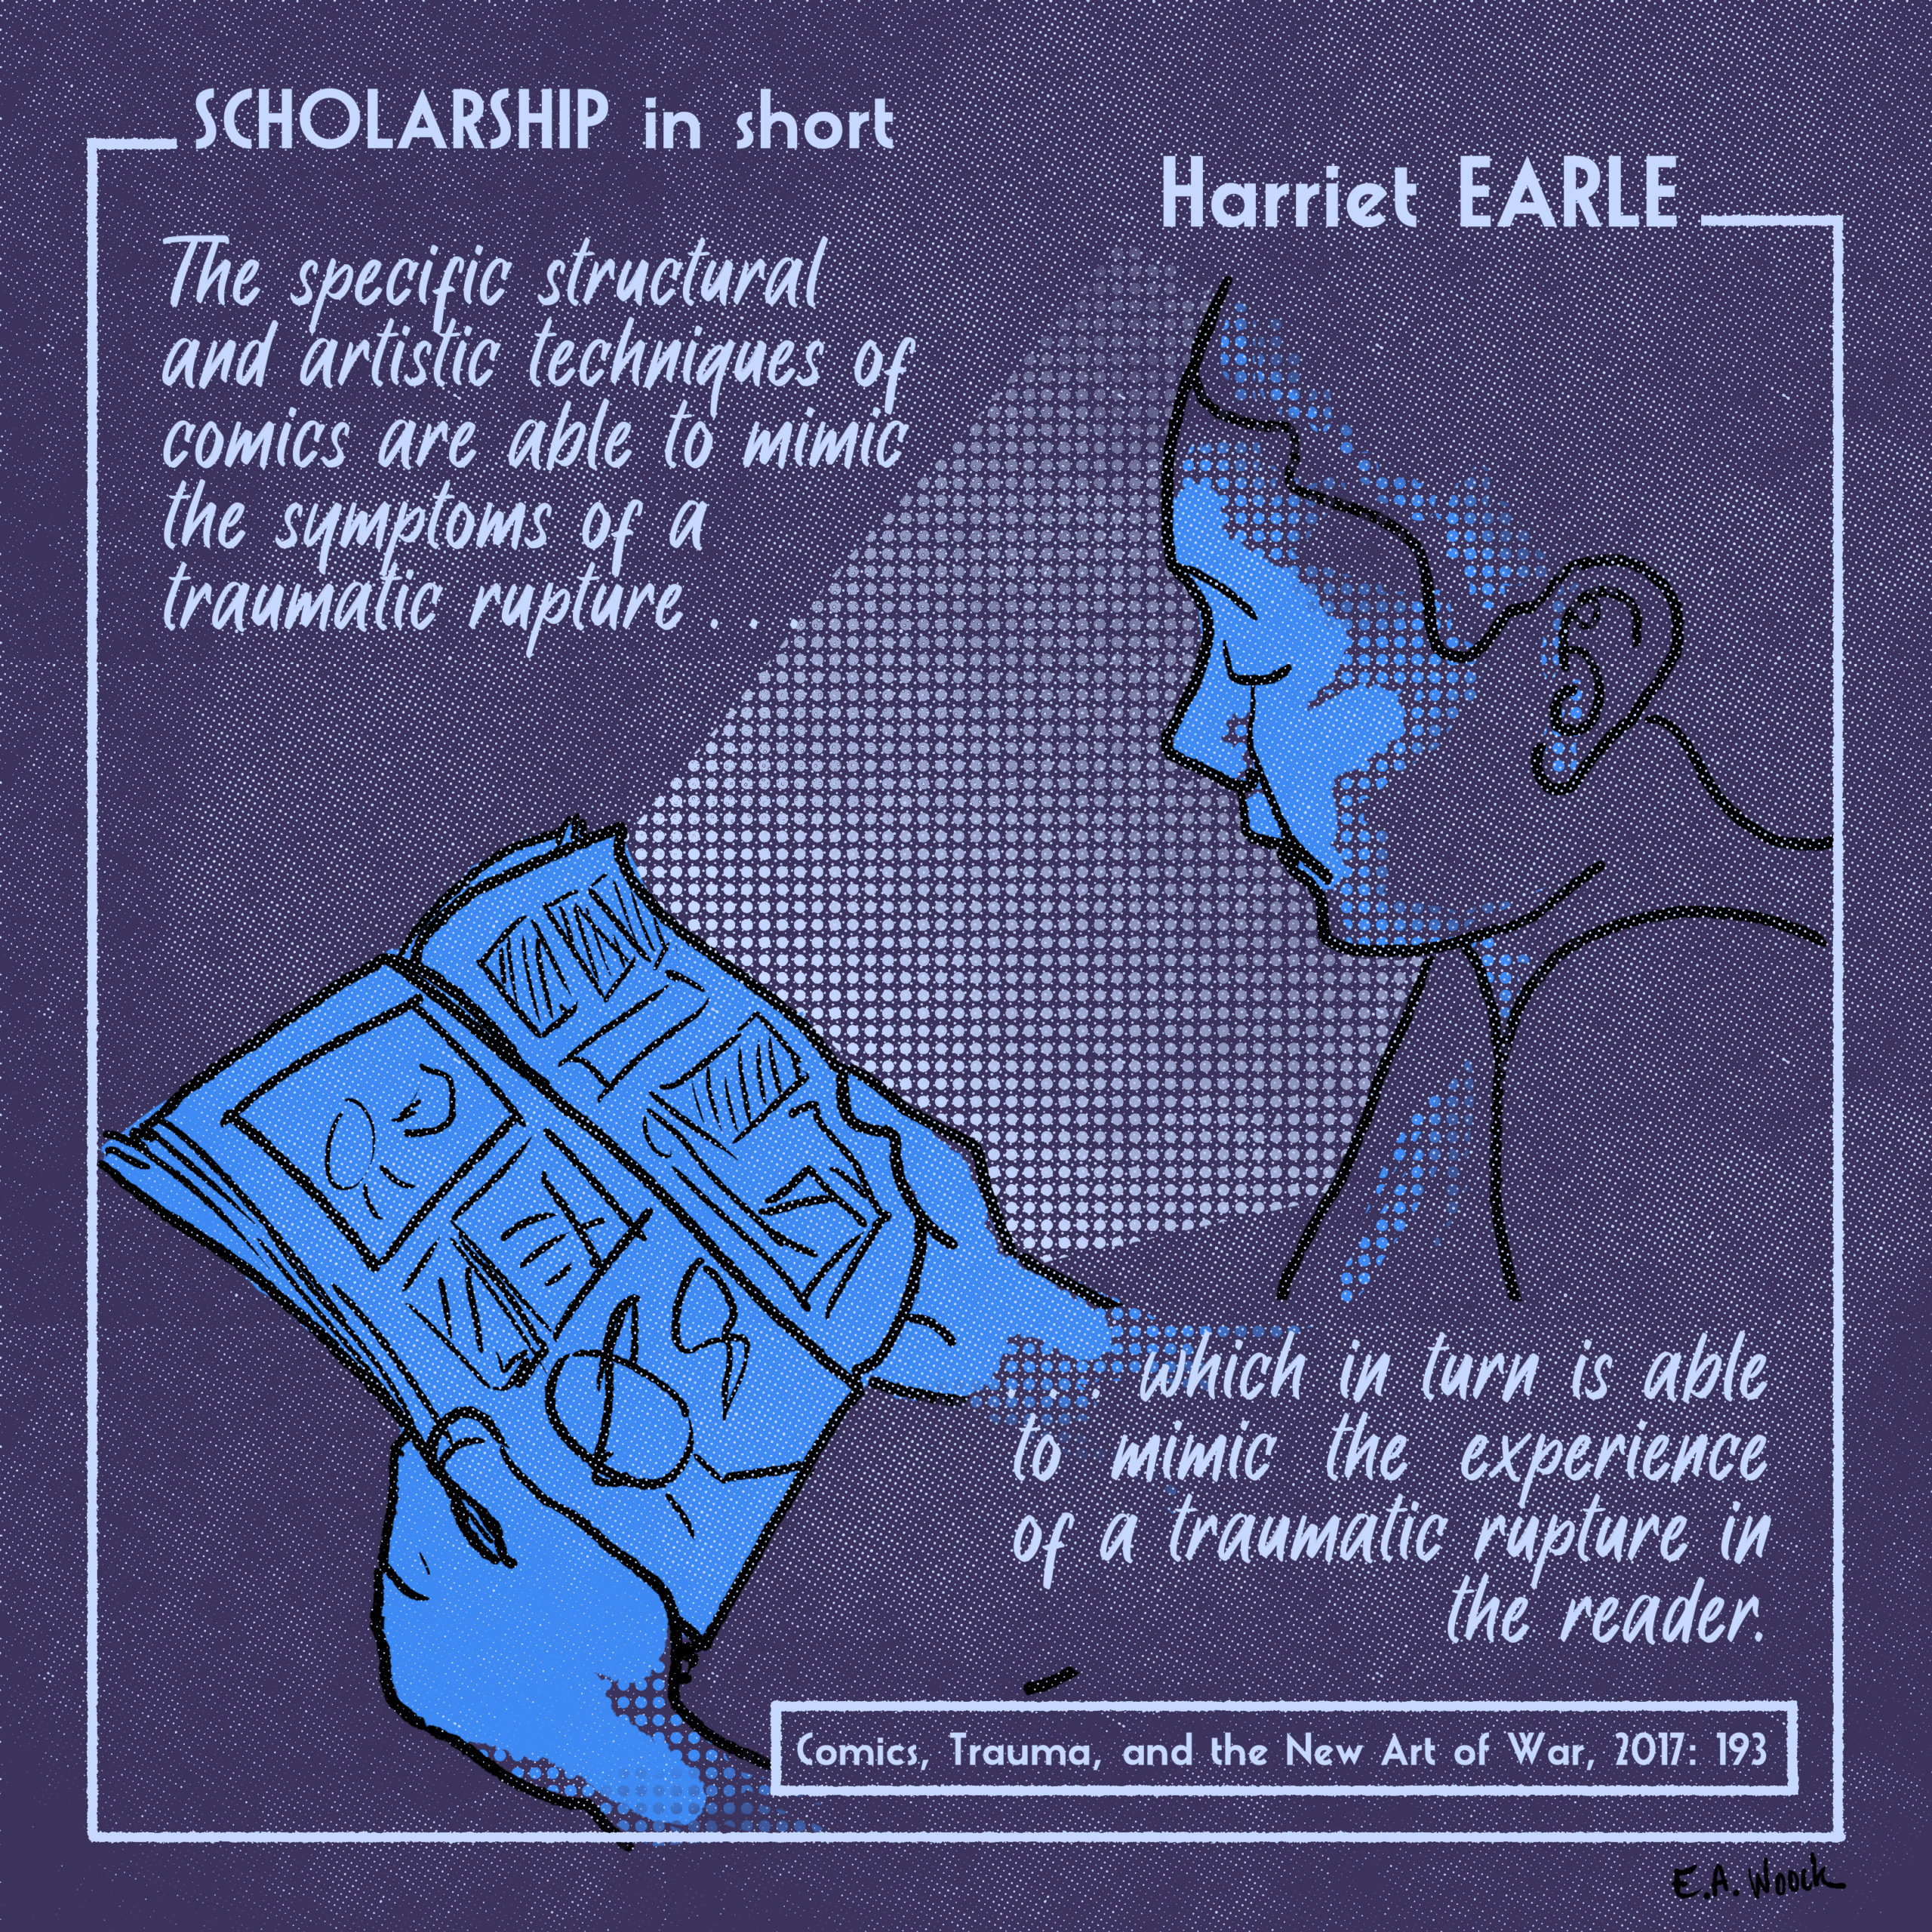 Harriet Earle: Comics, Trauma, and the New Art of War (University Press of Mississippi: 2017)